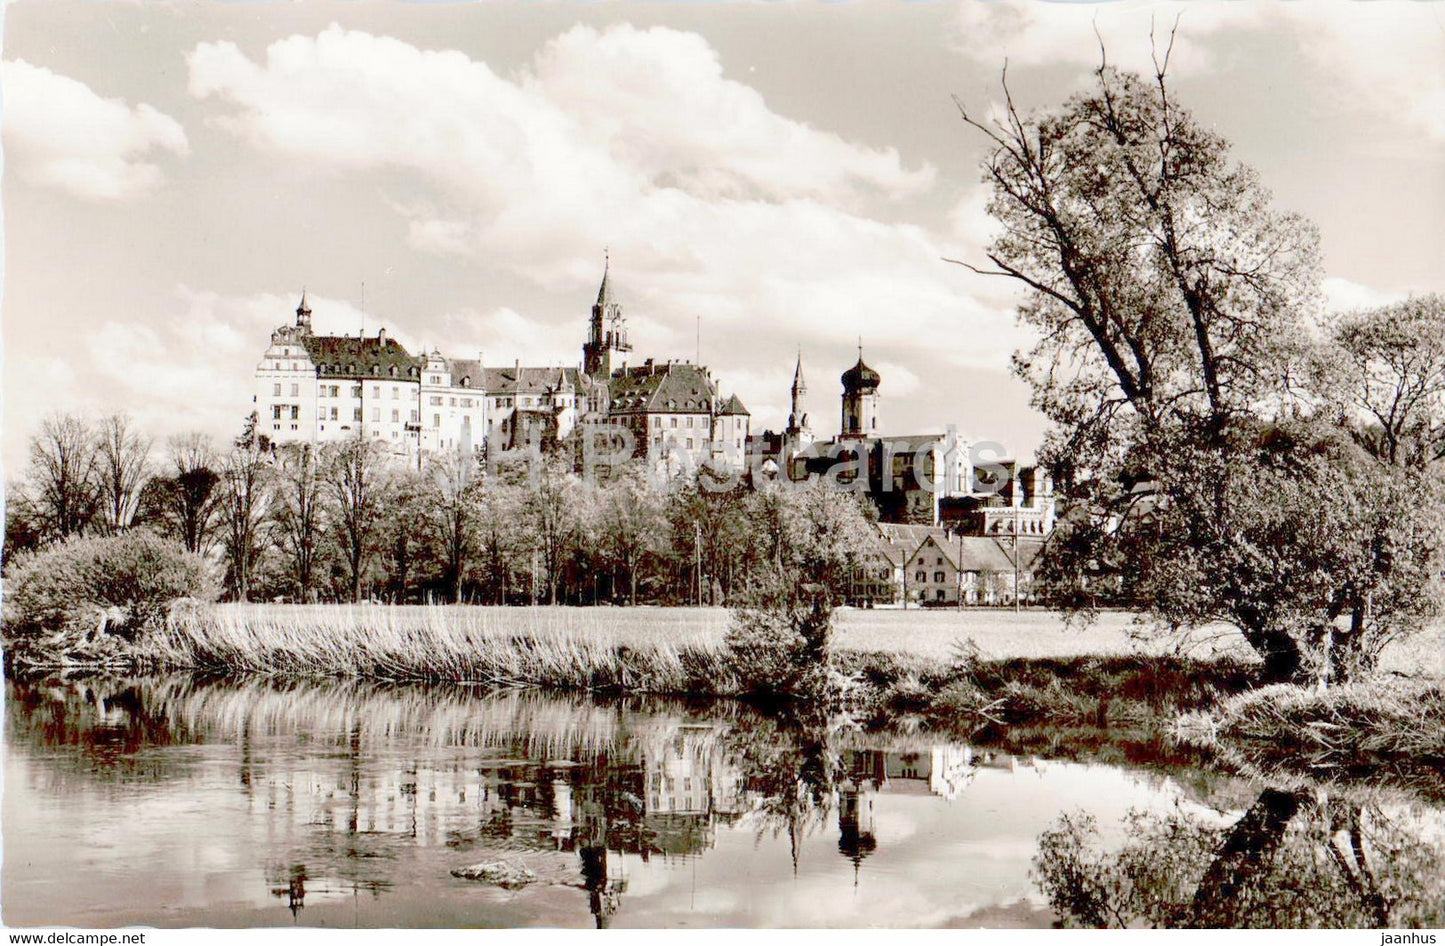 Sigmaringen an der Donau - Schloss - castle - old postcard - Germany - unused - JH Postcards